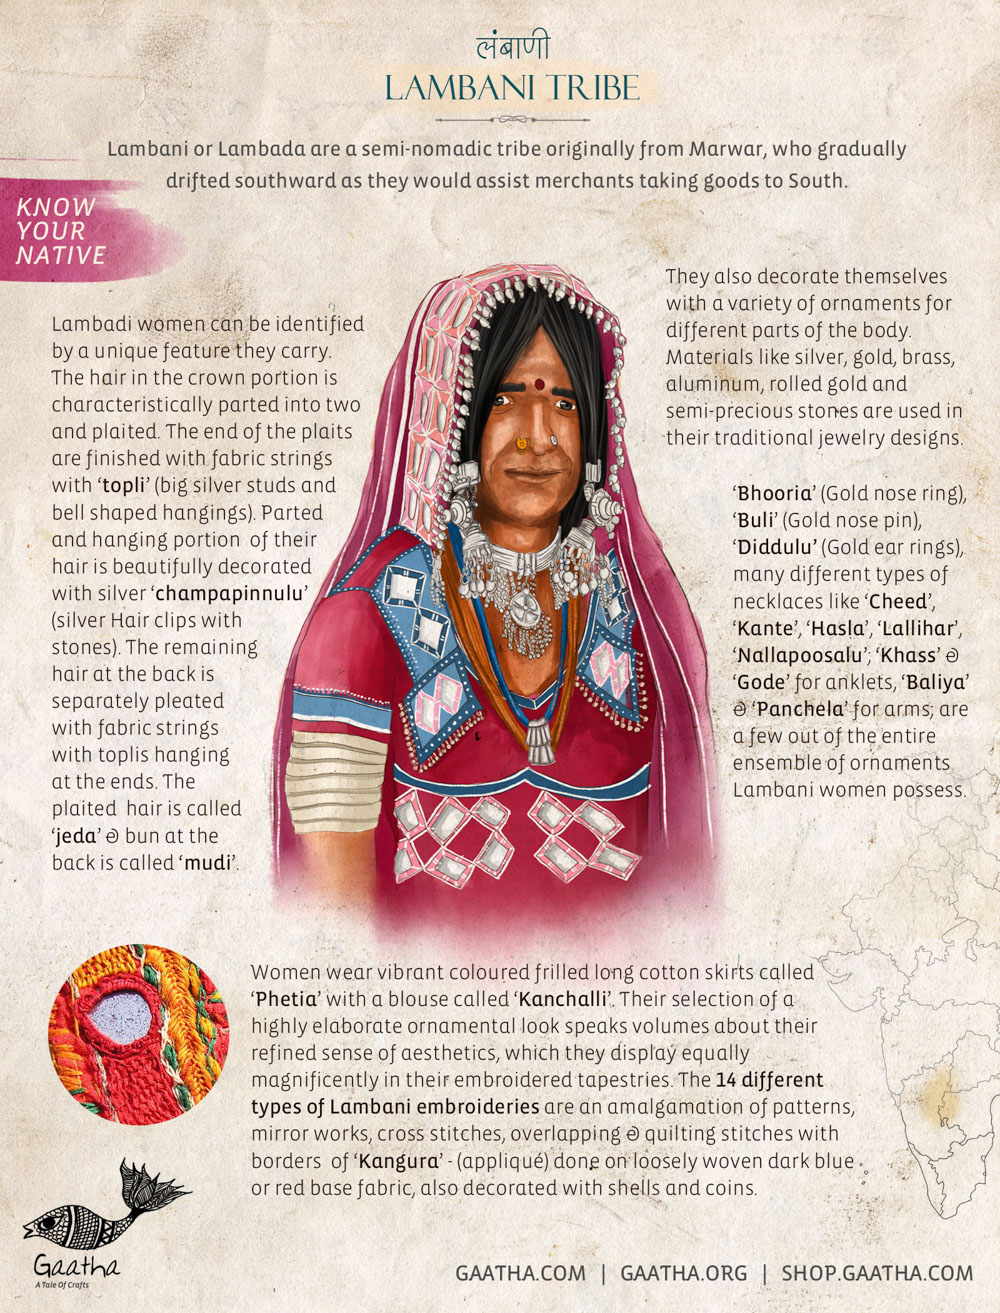 Lambani are a semi-nomadic tribe that are originally from Marwar.